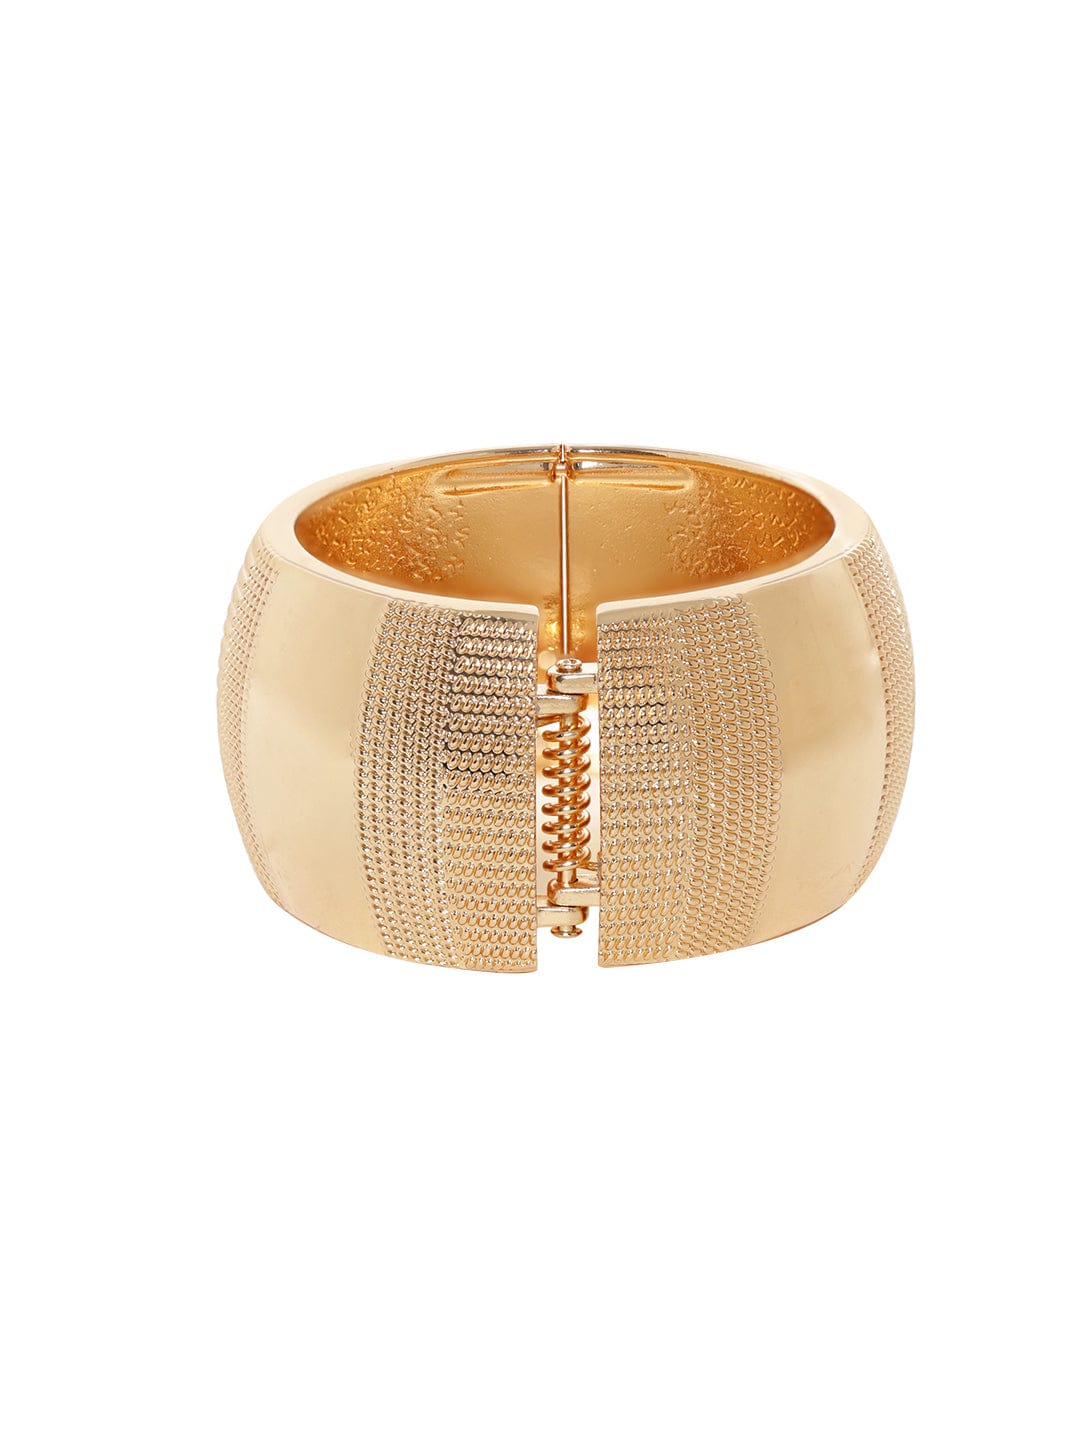 Rubans Voguish Gilded Harmony: Set of 2 Gold-Colored Bracelets Bangles &amp; Bracelets